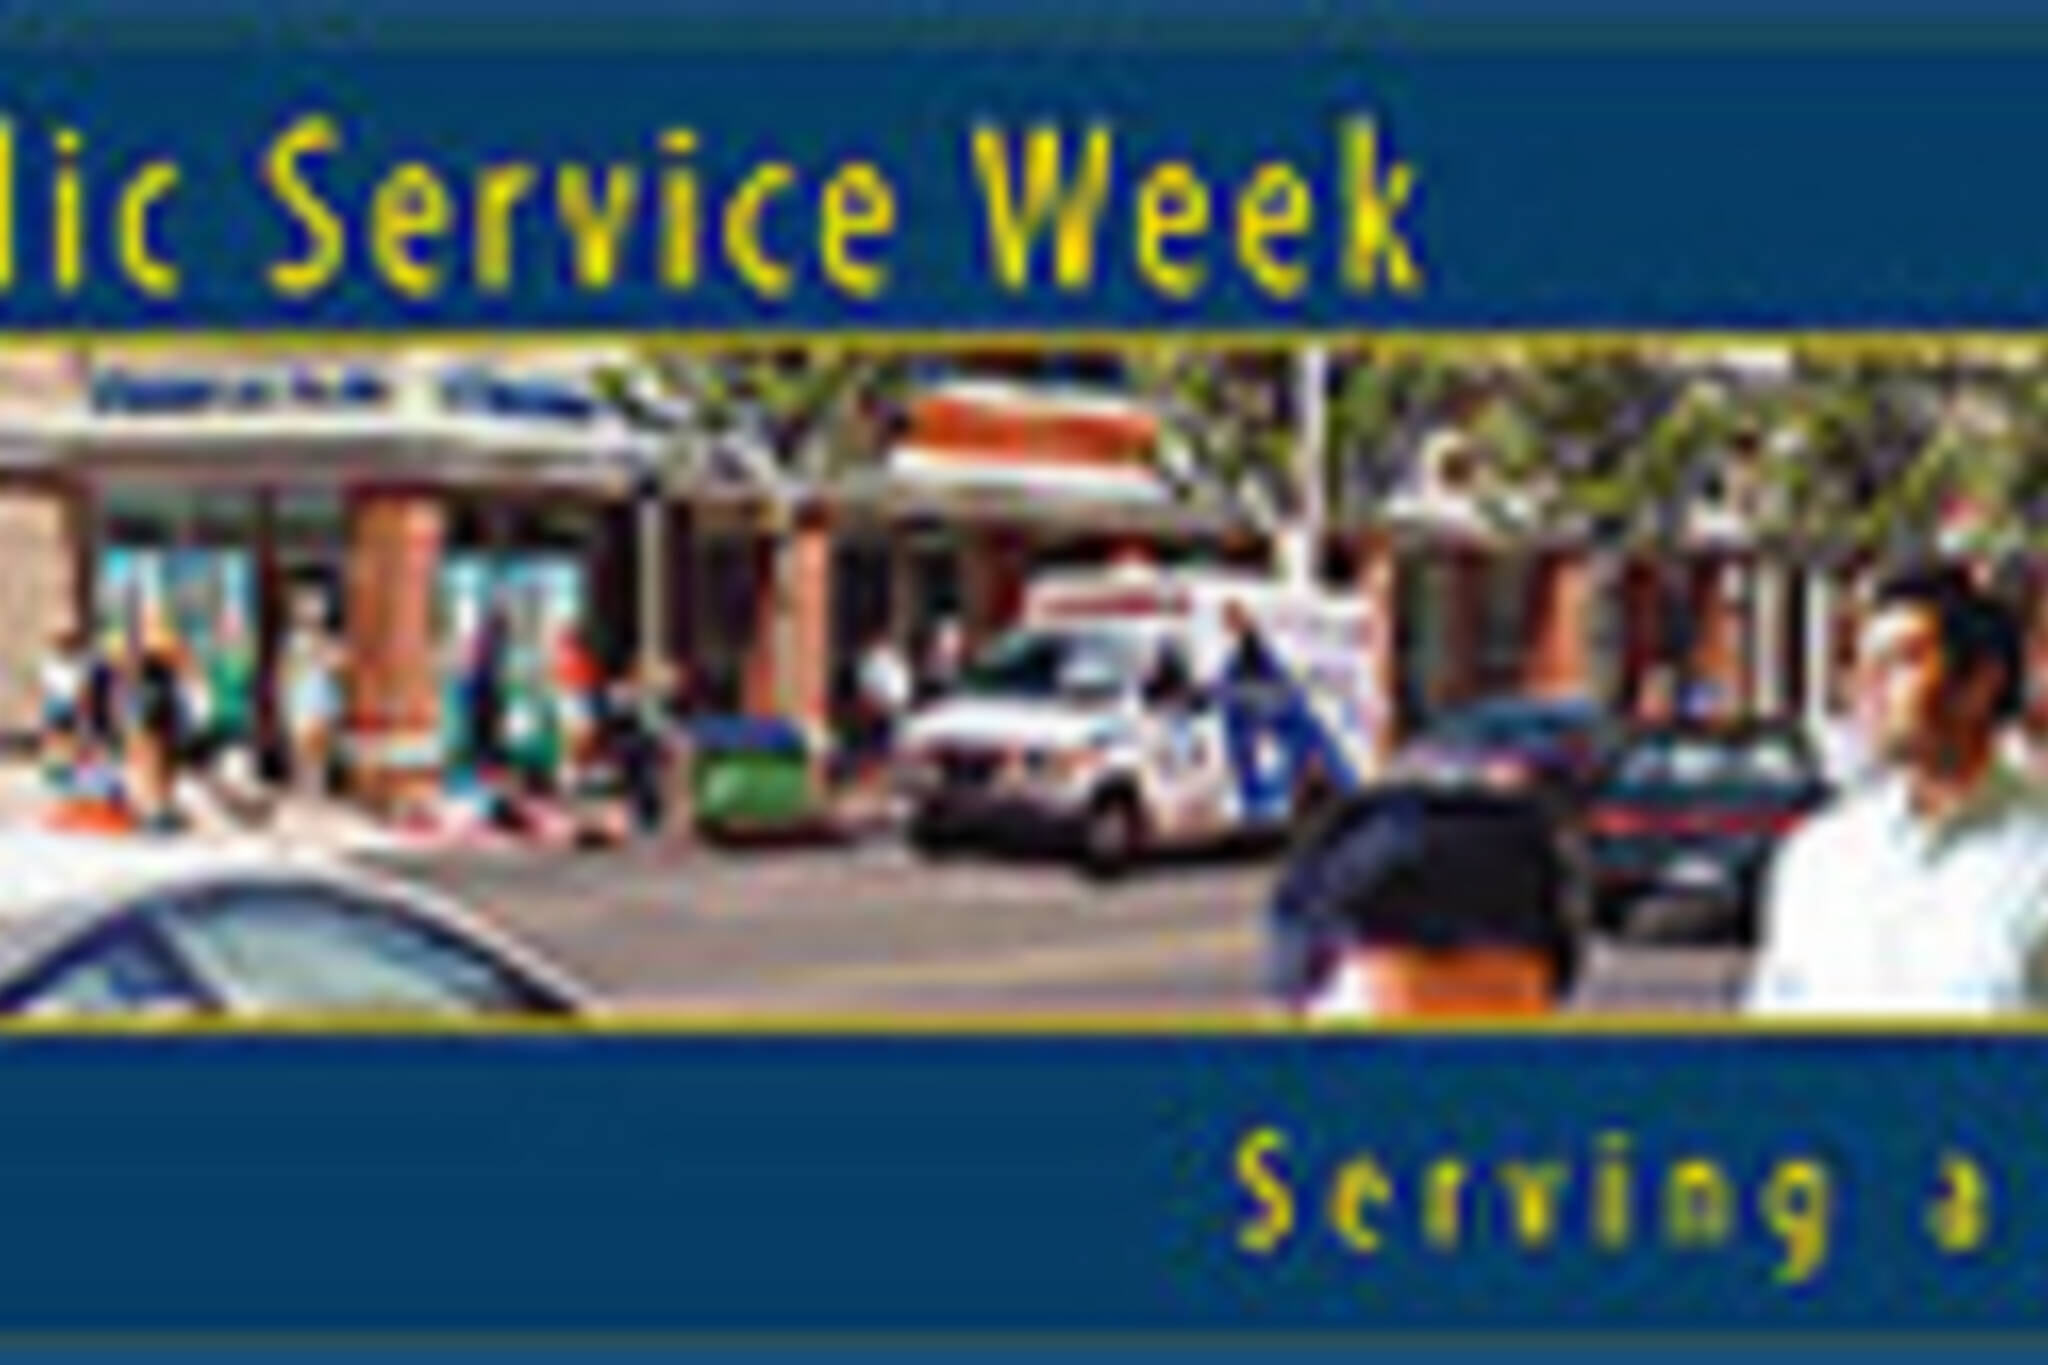 Toronto Public Service Week Kicks Off